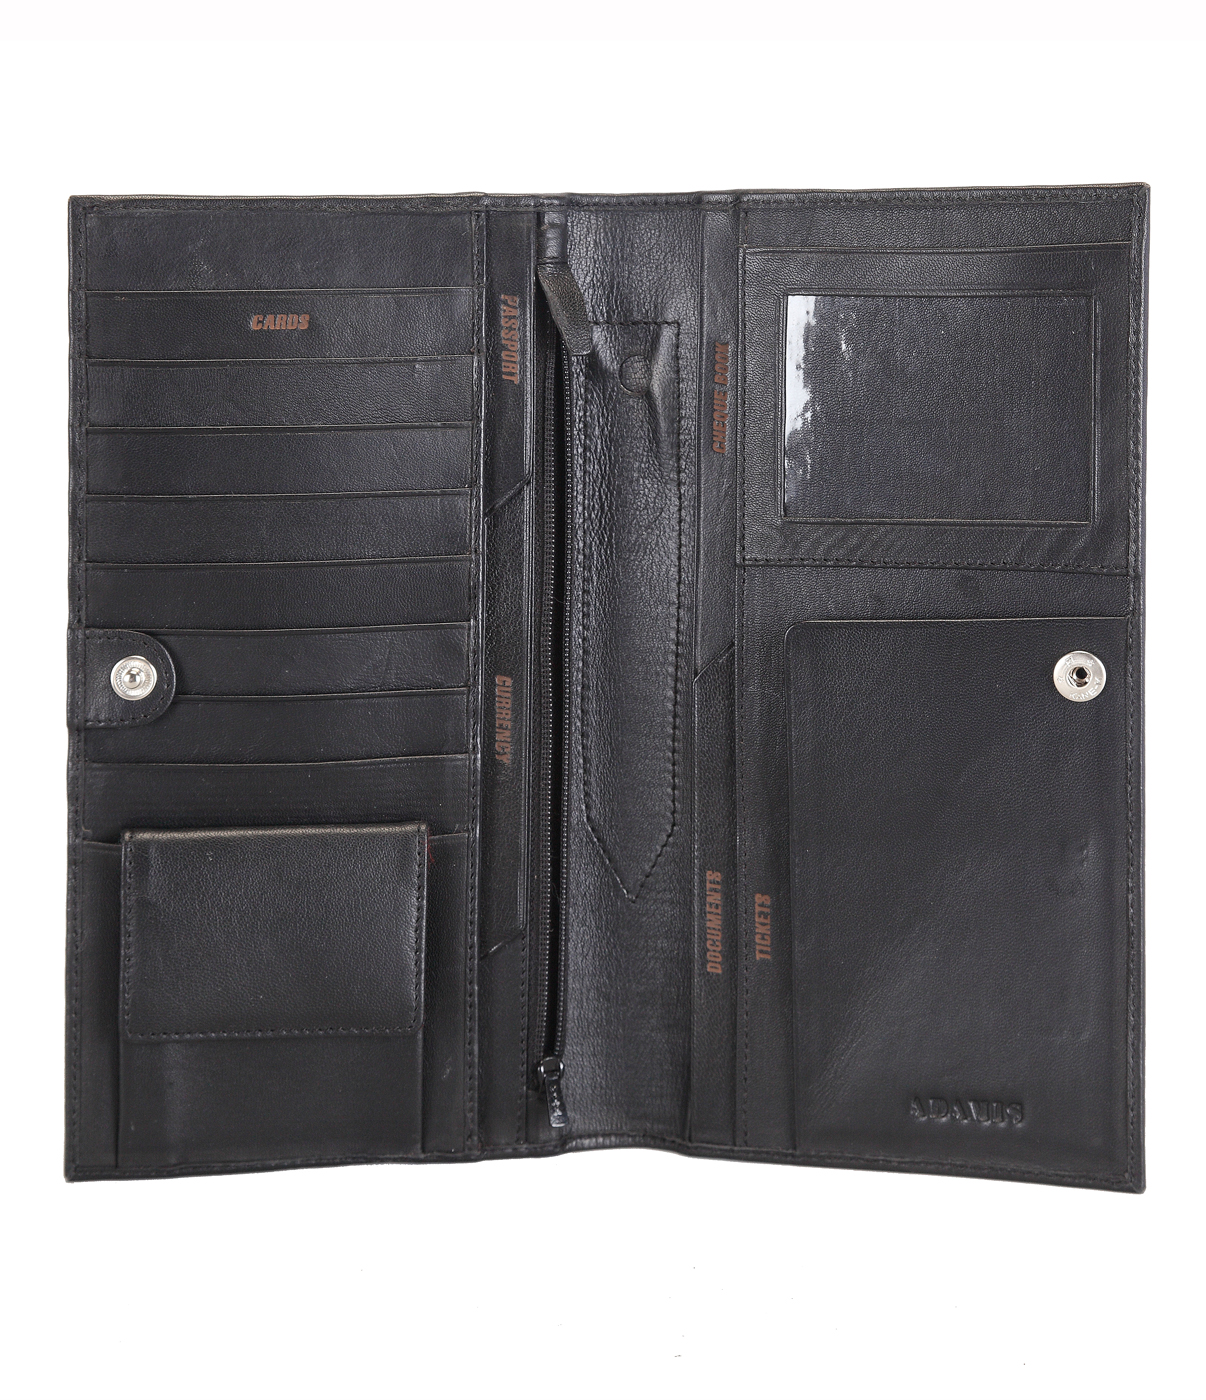 W10-Novio-Travel document wallet in soft Genuine Leather - Black